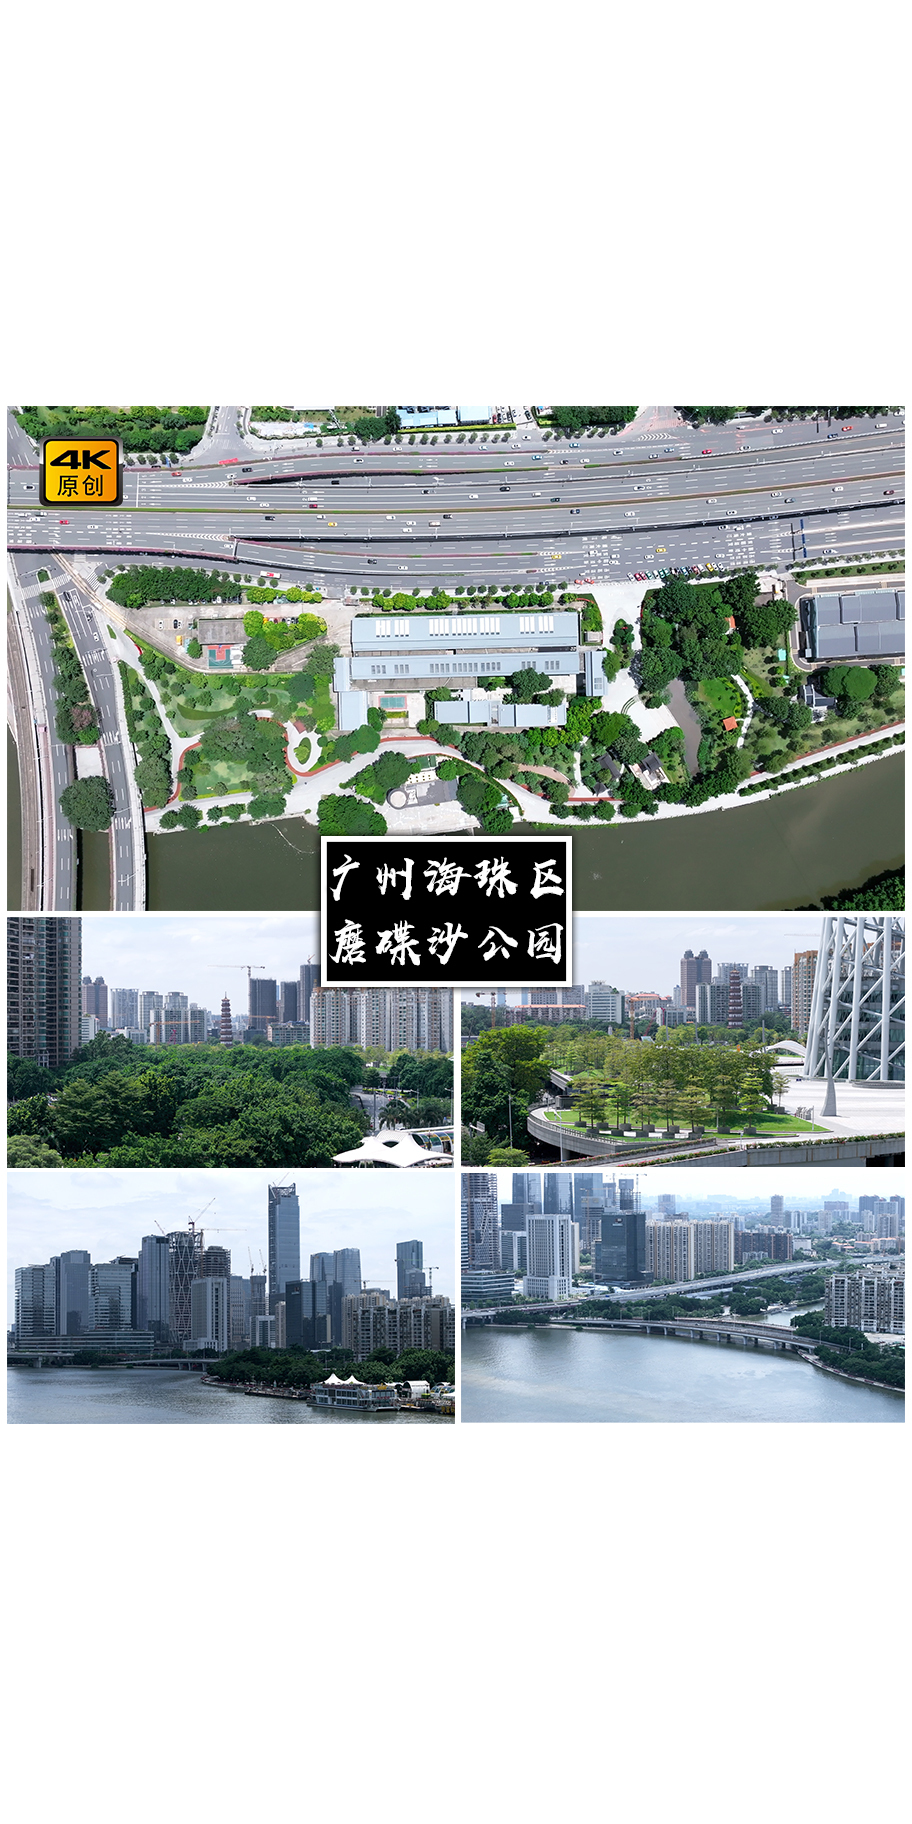 4K高清 | 广州磨碟沙公园航拍合集